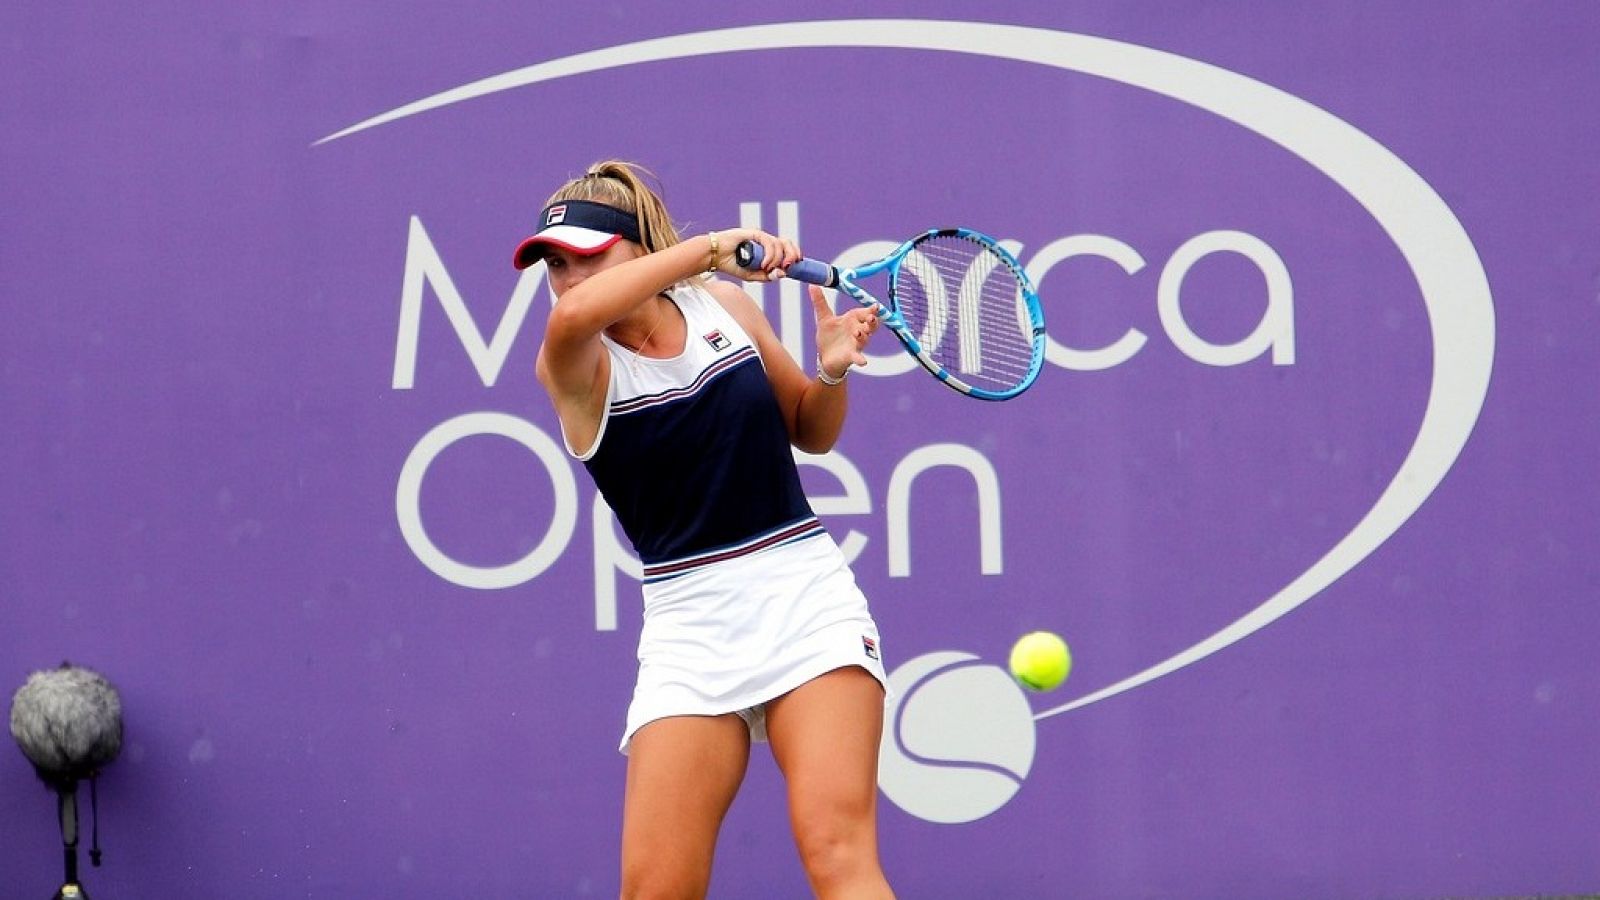 Tenis - WTA Torneo Internacional Mallorca. Open 2019 1ª Semifinal: S. Kenin - A. Sevastova